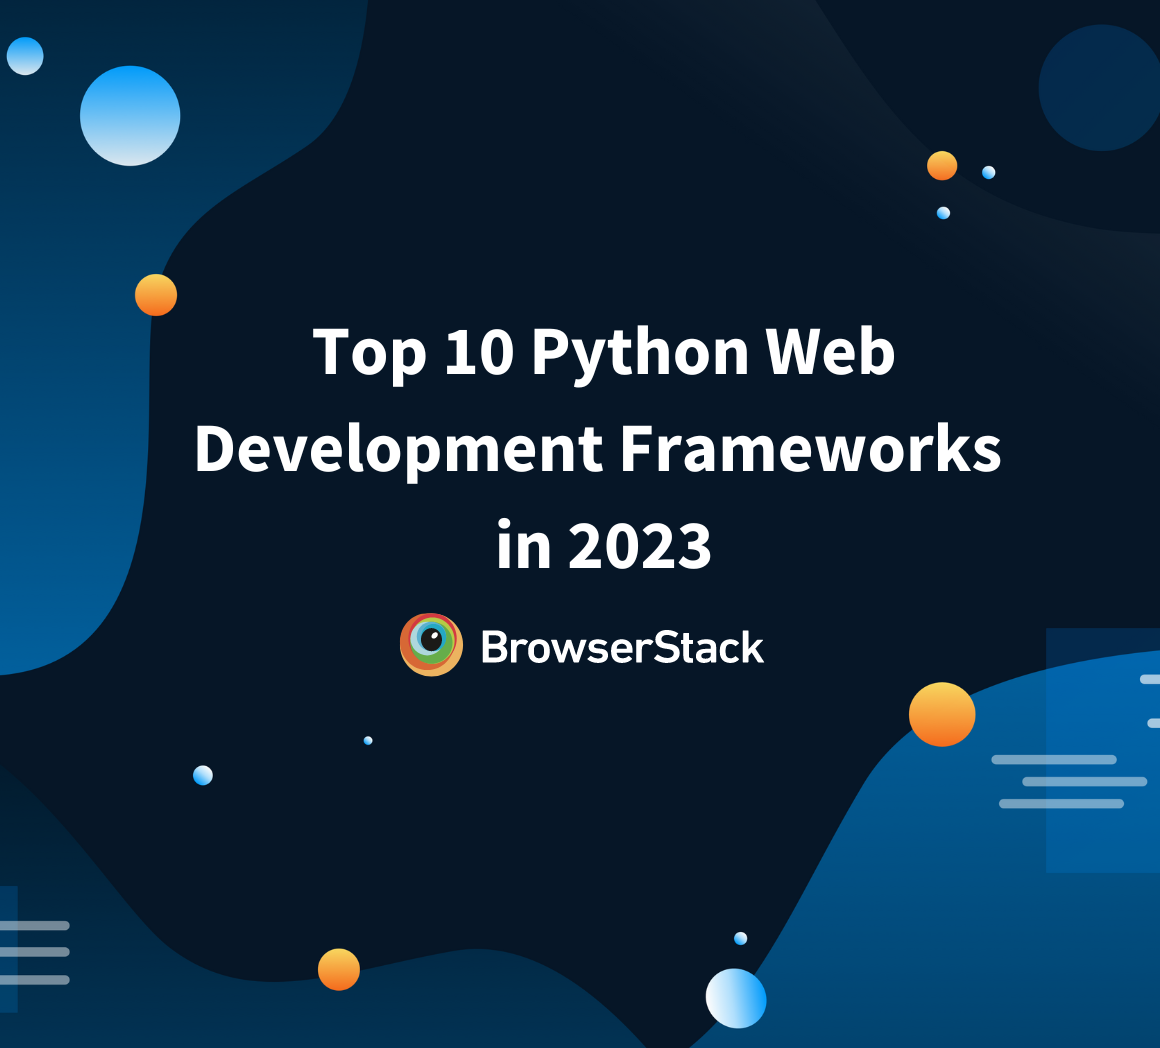 Top 10 Python Web Development Frameworks in 2023